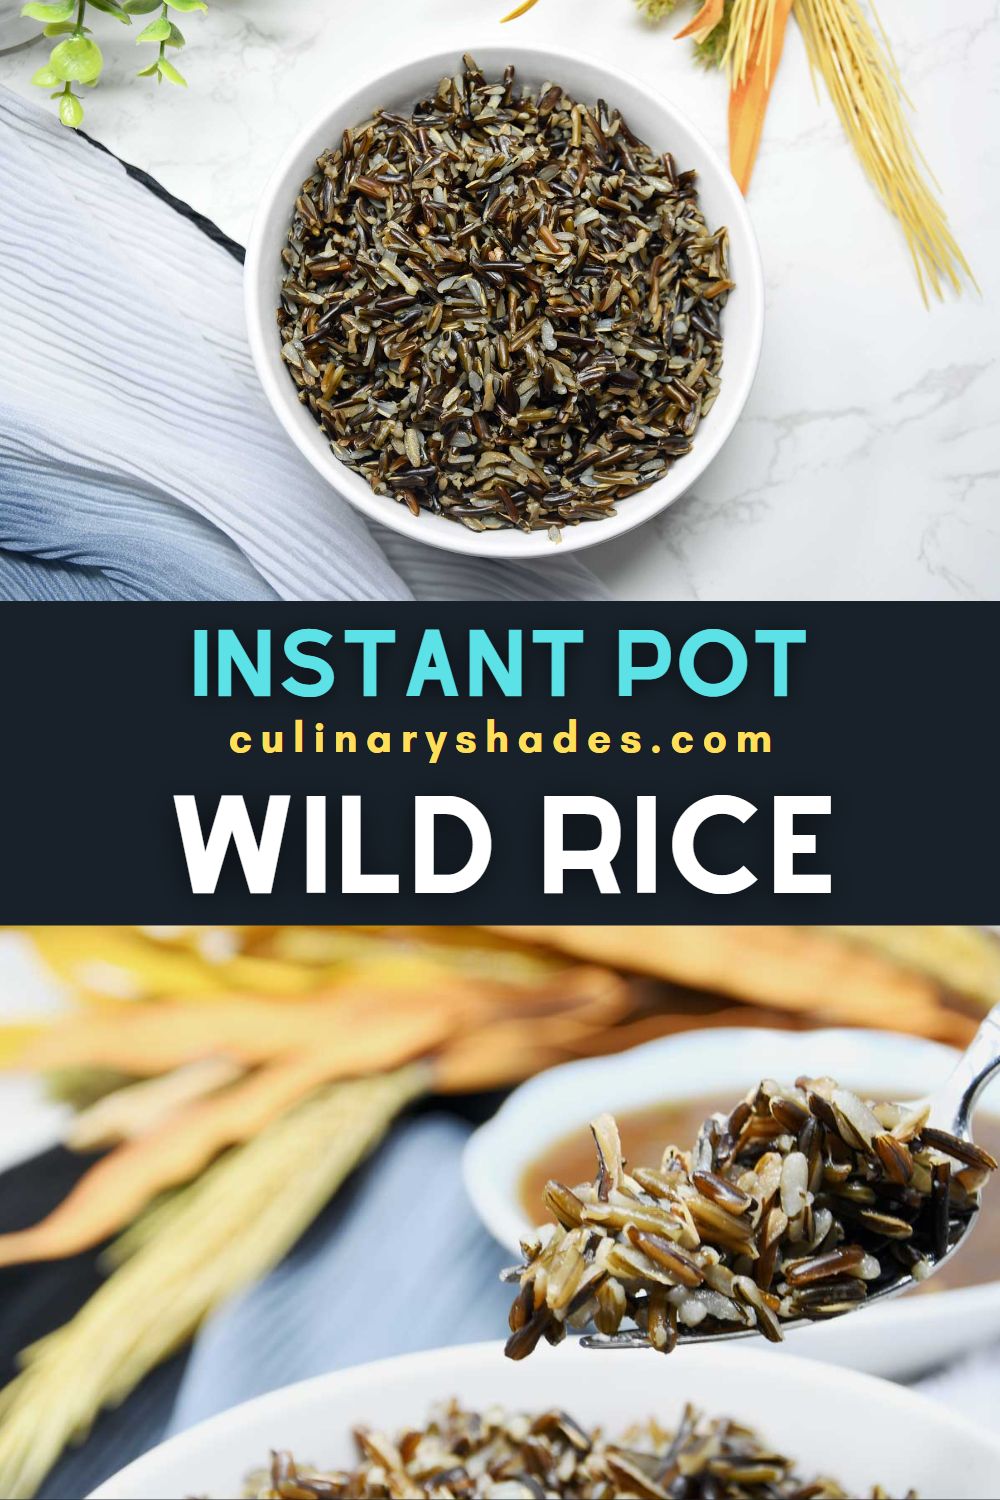 Instant pot wild rice pin.